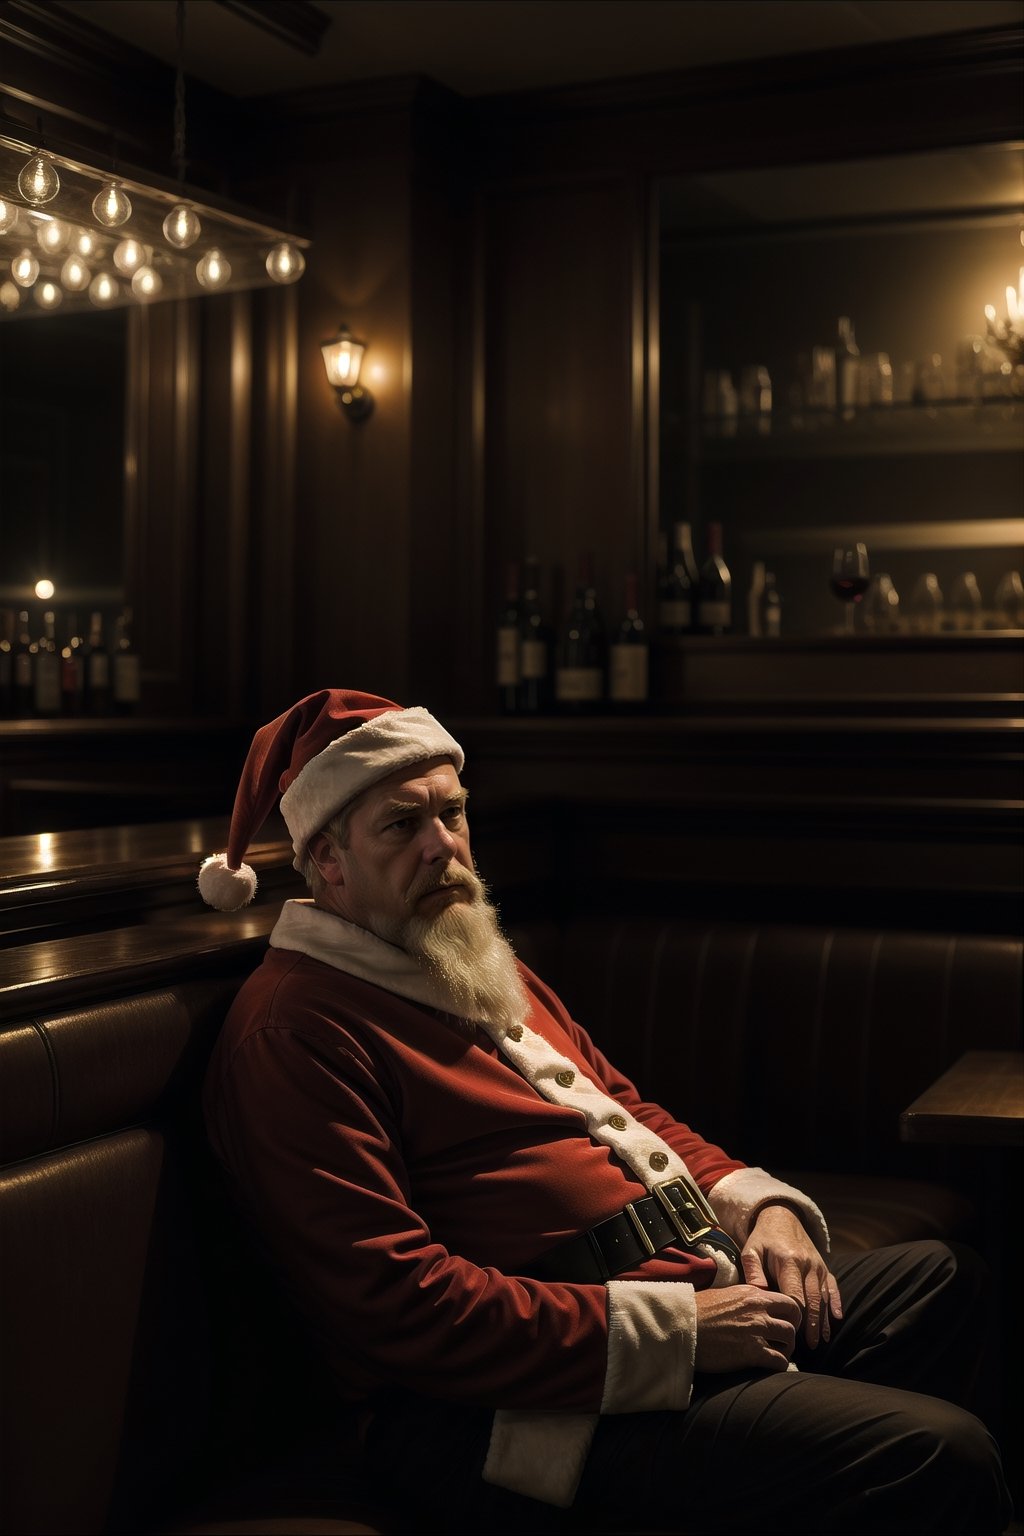 Masterpiece,ultra detail, a sad santa Chris sit in empty bar, drinking wine, dark atmosphere , low key, 